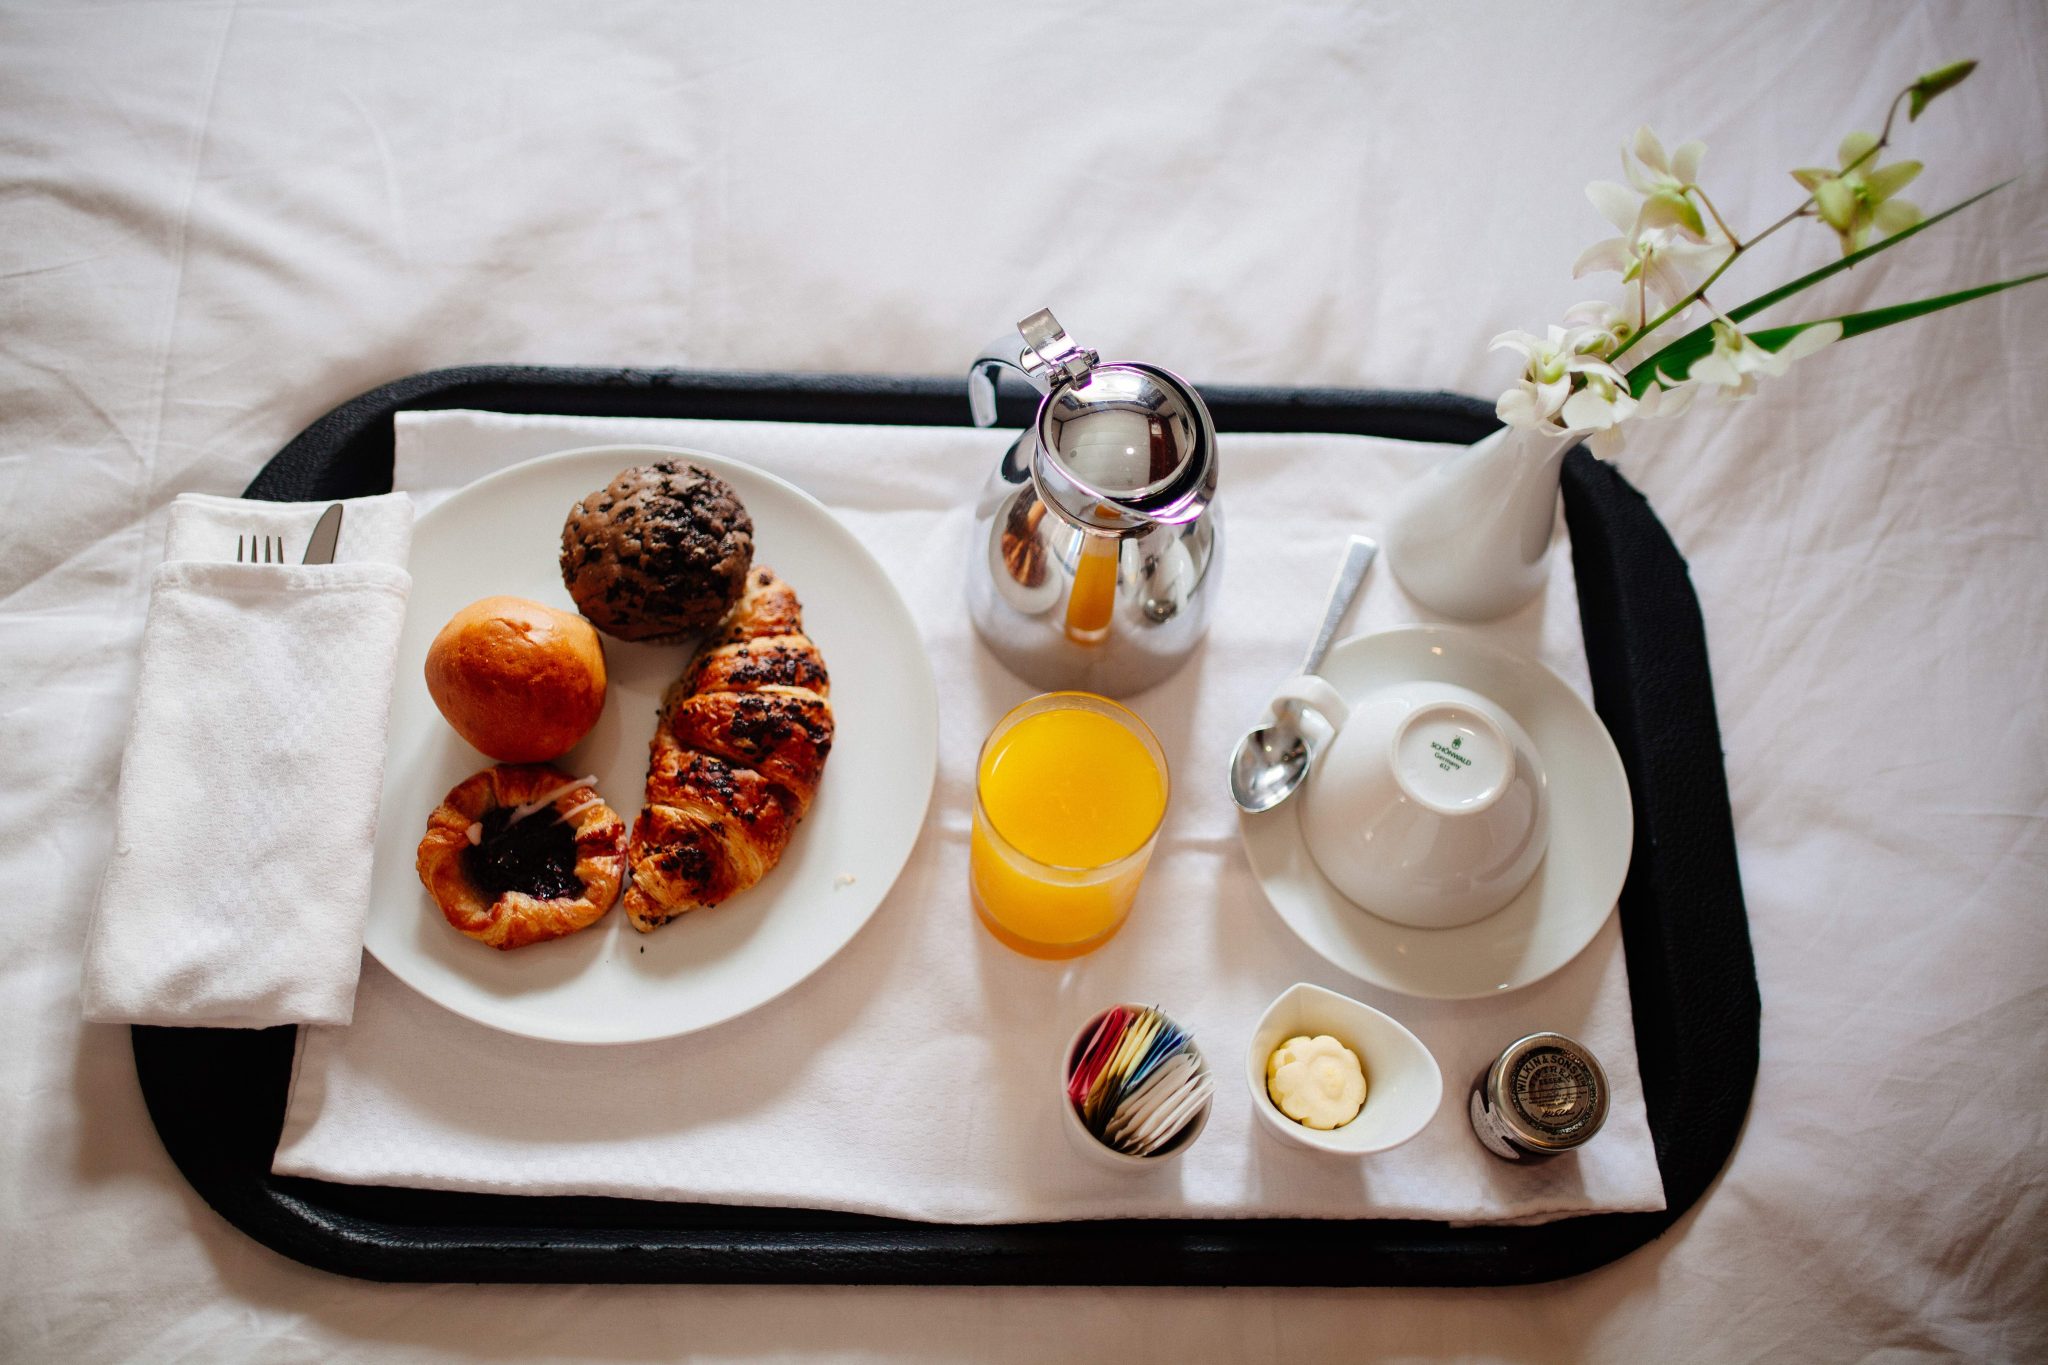 Room service breakfast